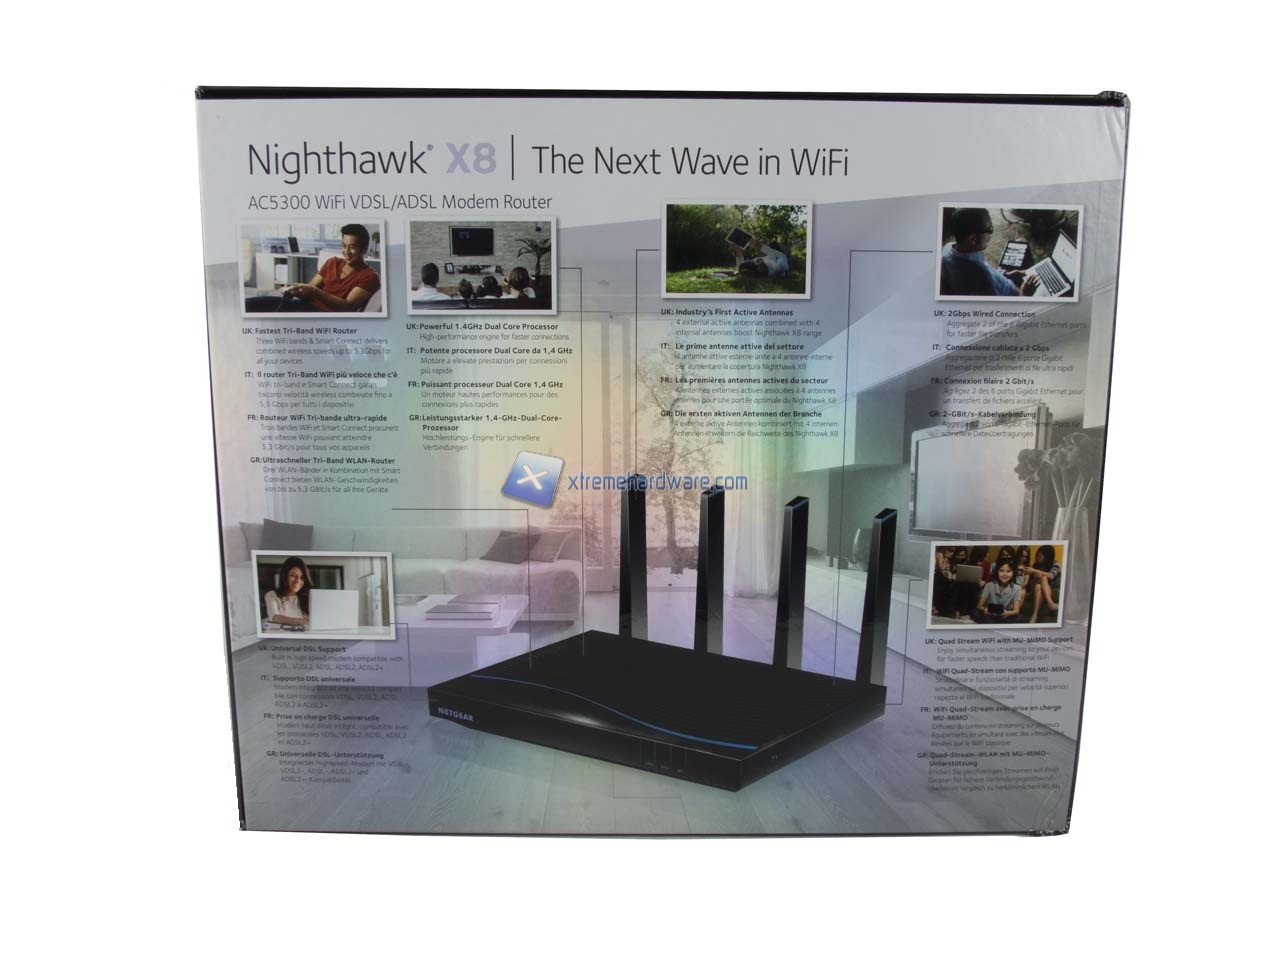 netgear nighthawk x8 manual